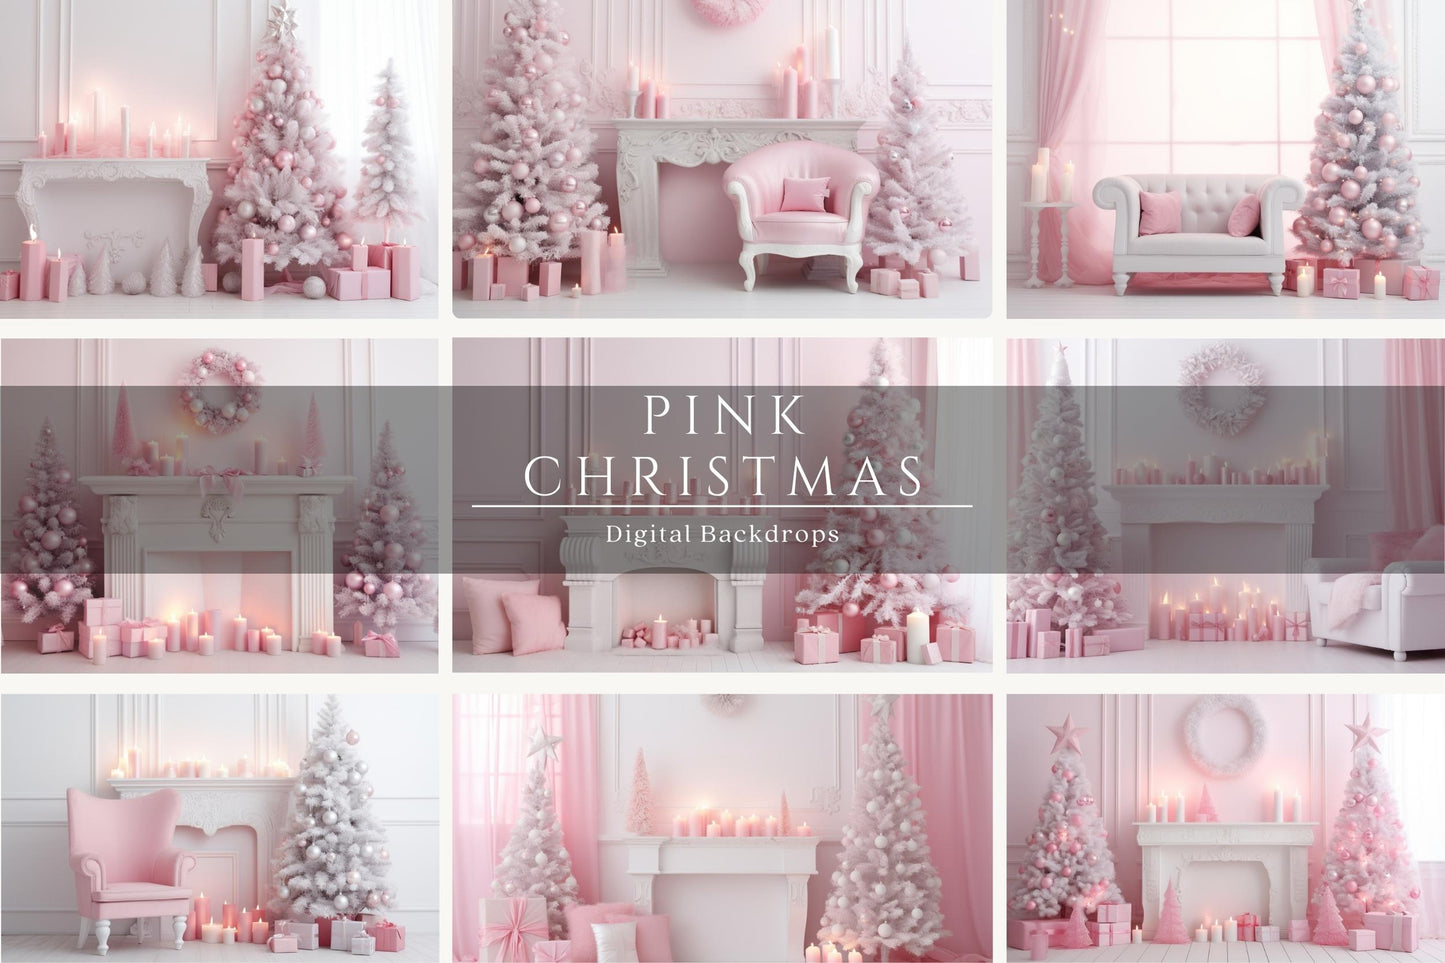 Pink Christmas Digital Backdrops